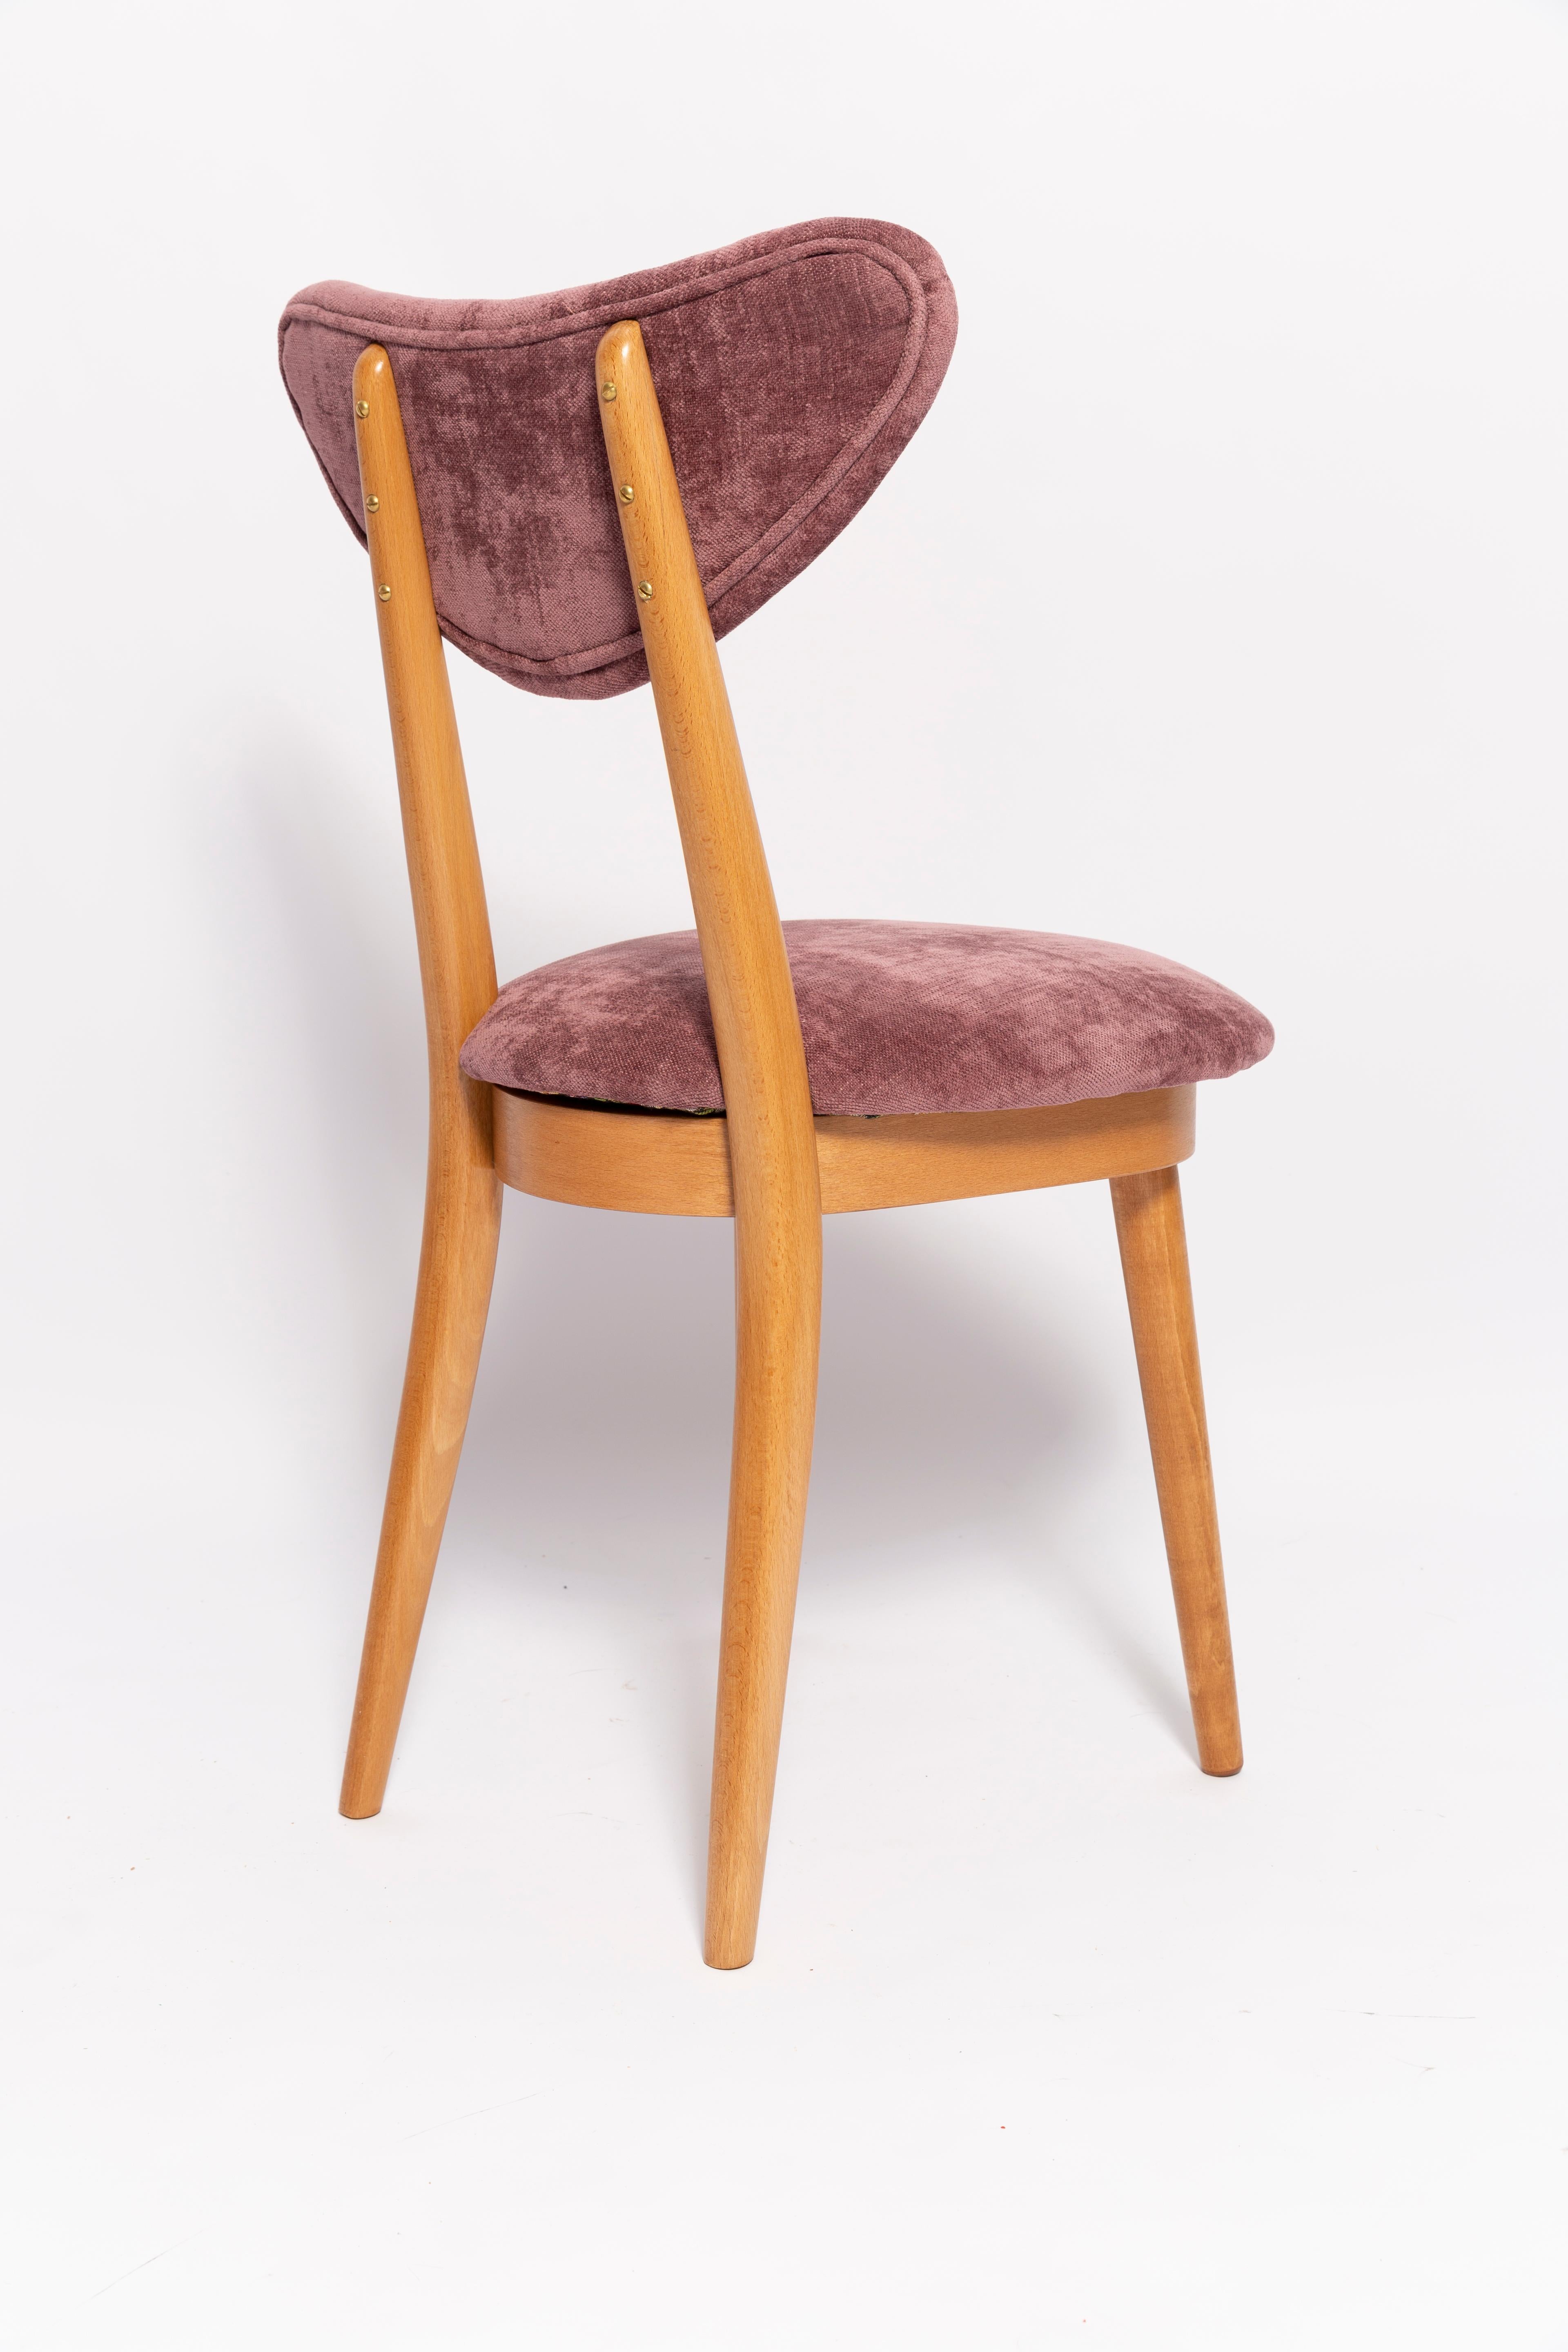 Set of Six Mid Century Plum Violet Velvet, Light Wood Heart Chairs, Europe, 1960 For Sale 2